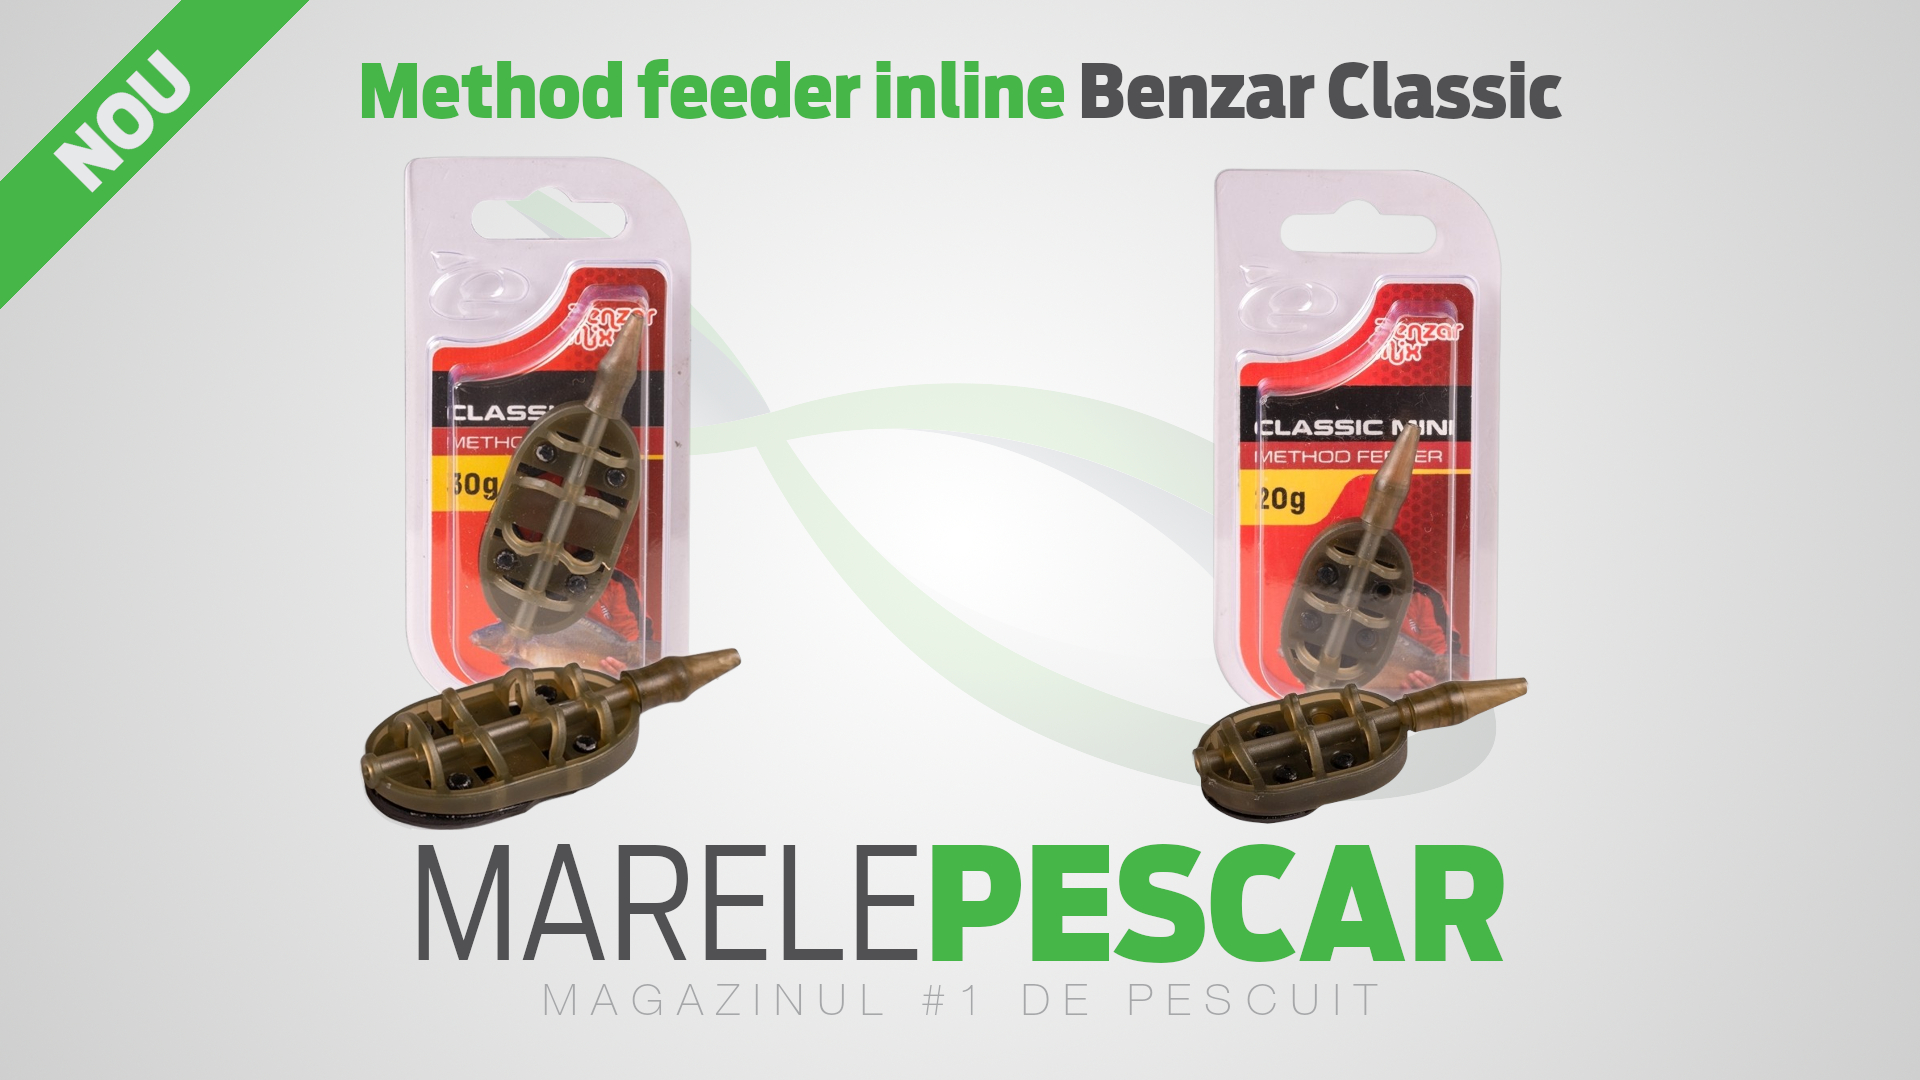 Method feeder inline Benzar Classic